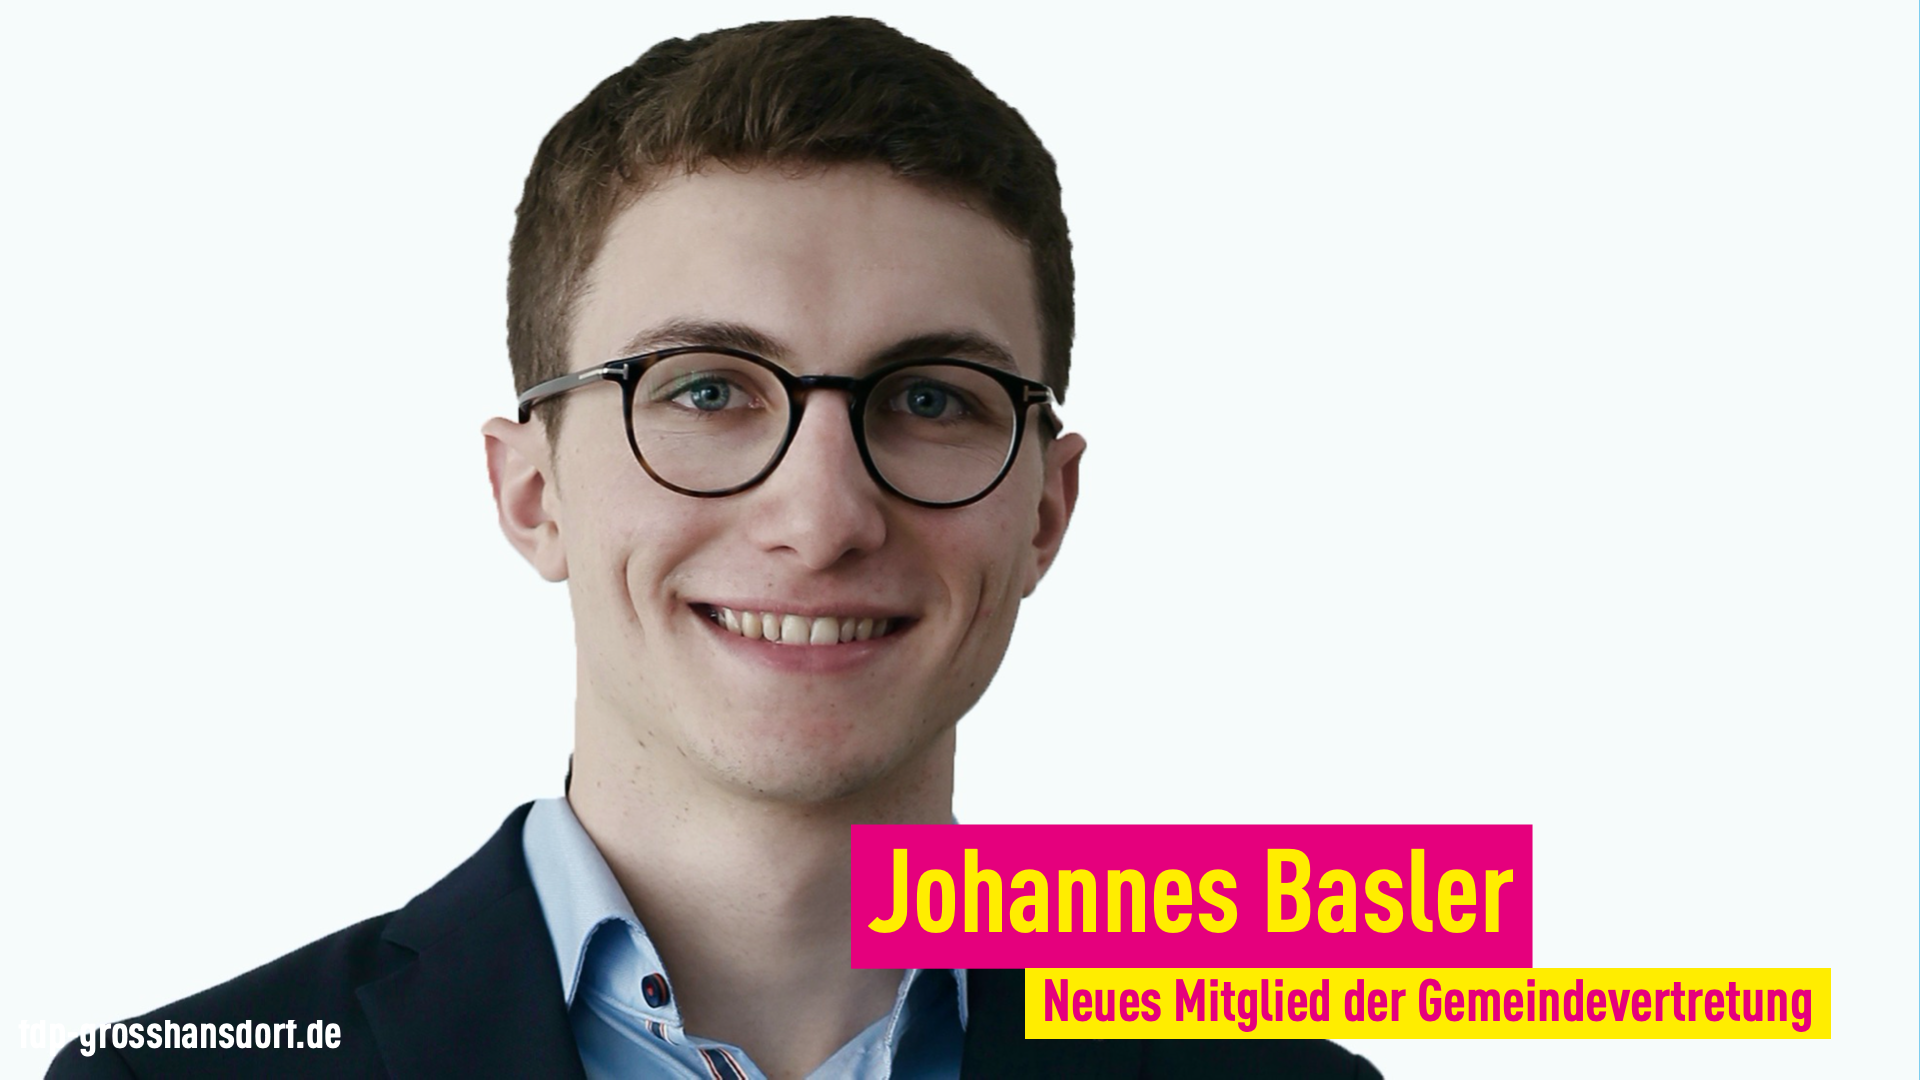 Johannes Basler